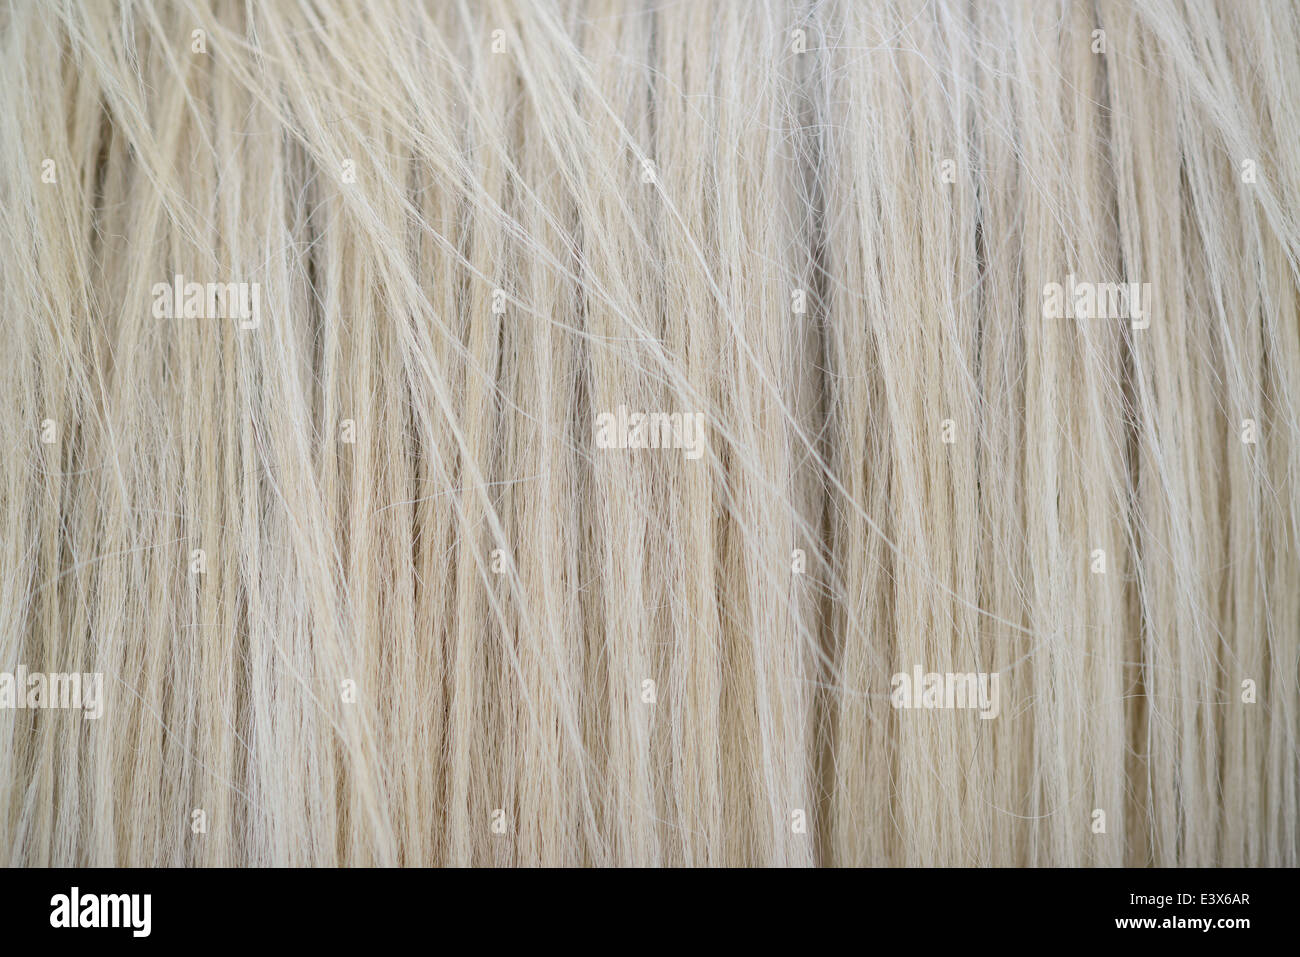 White horse high detailed hair texture Stock Photo